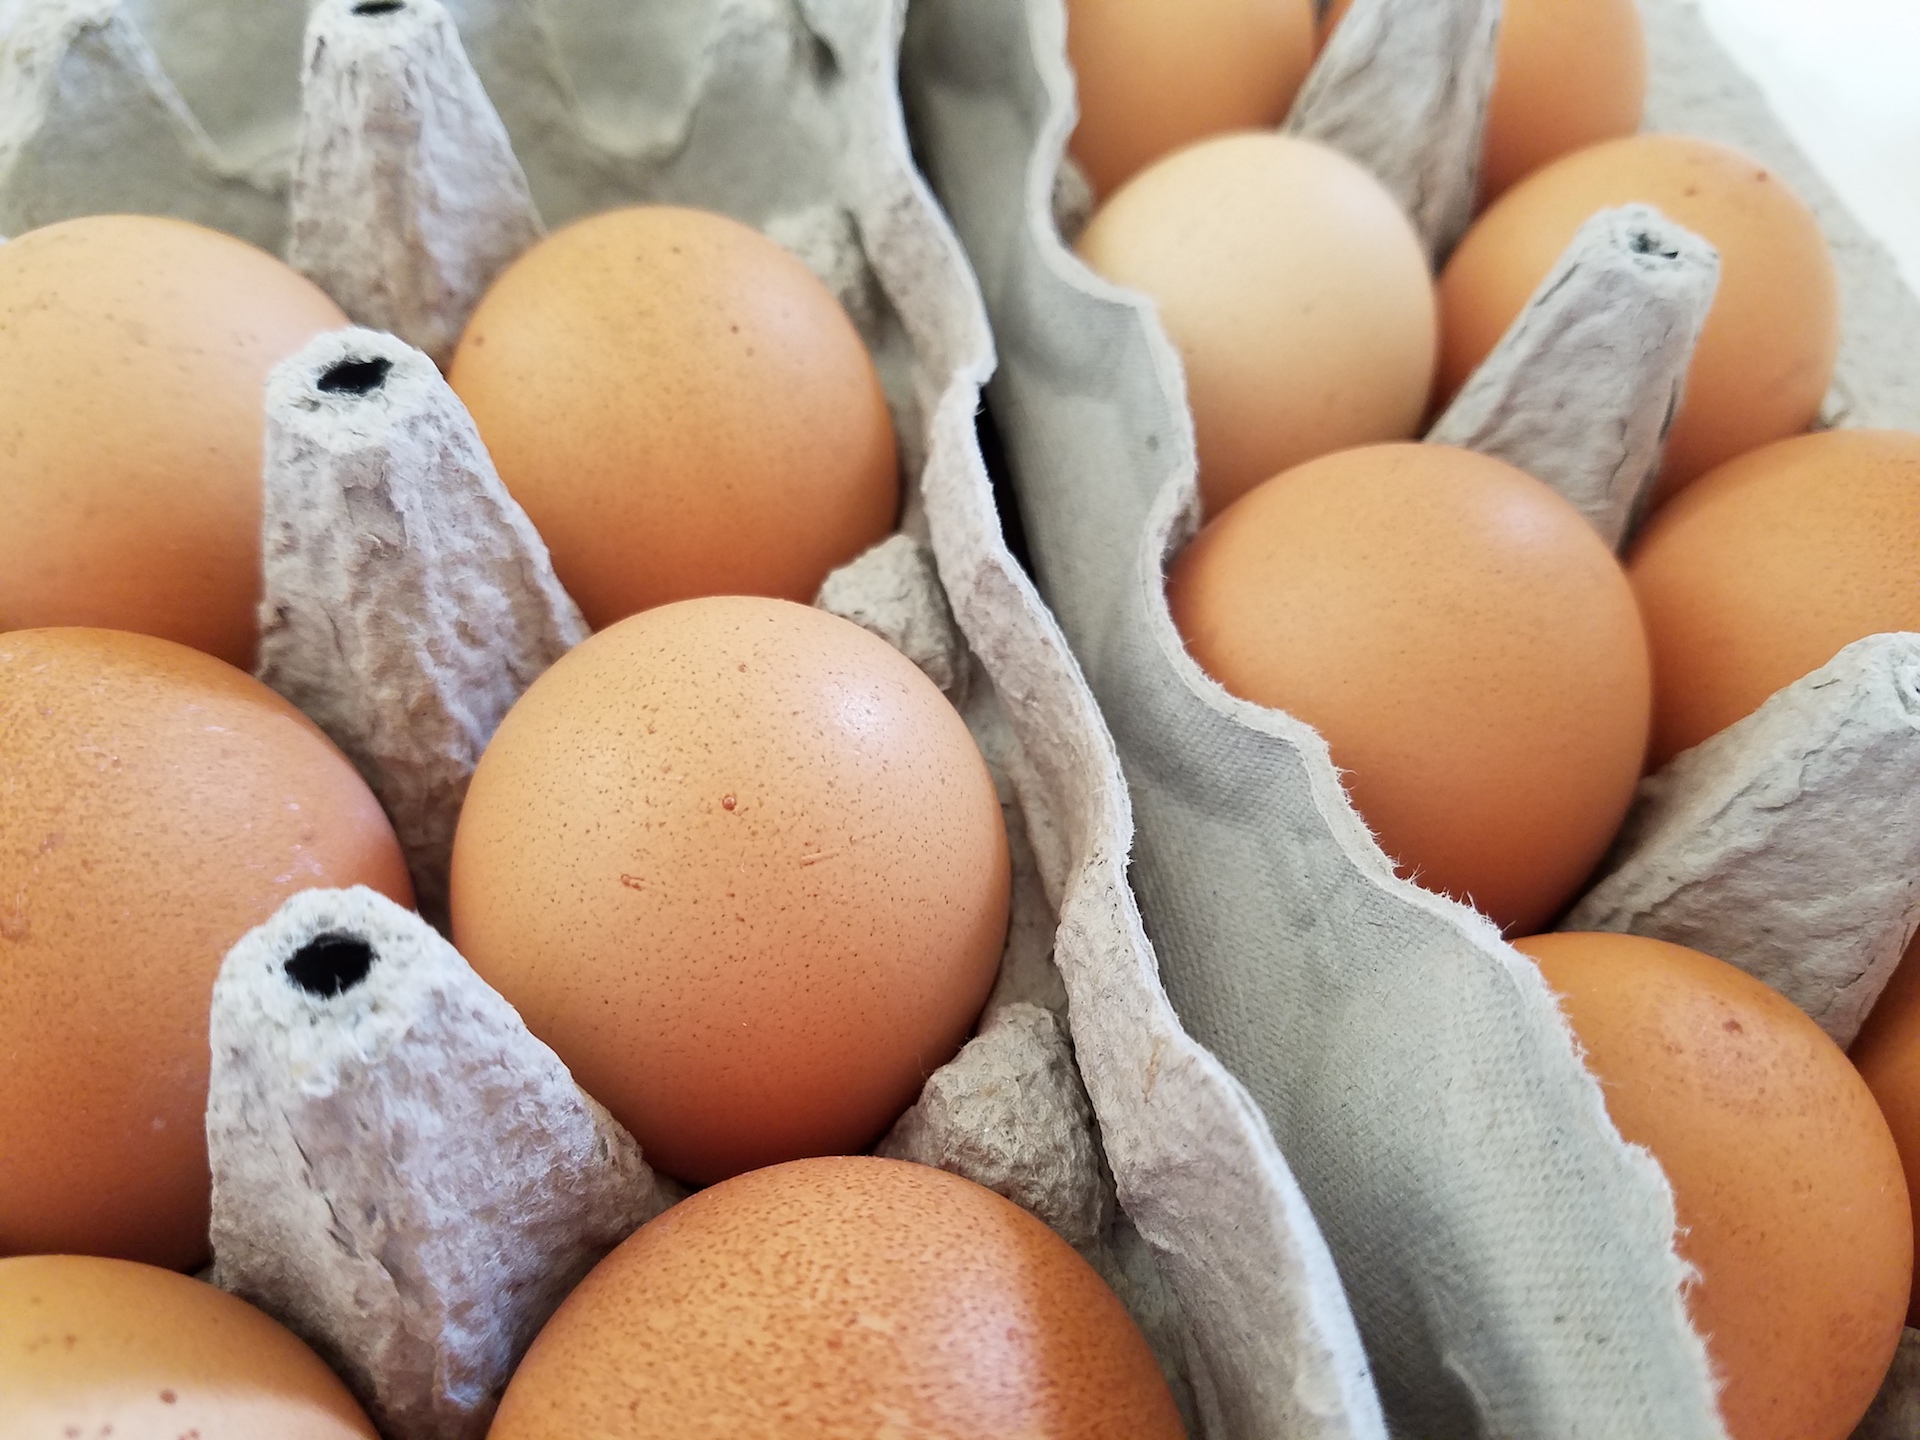 Clover's organic and organic Omega-3 eggs.